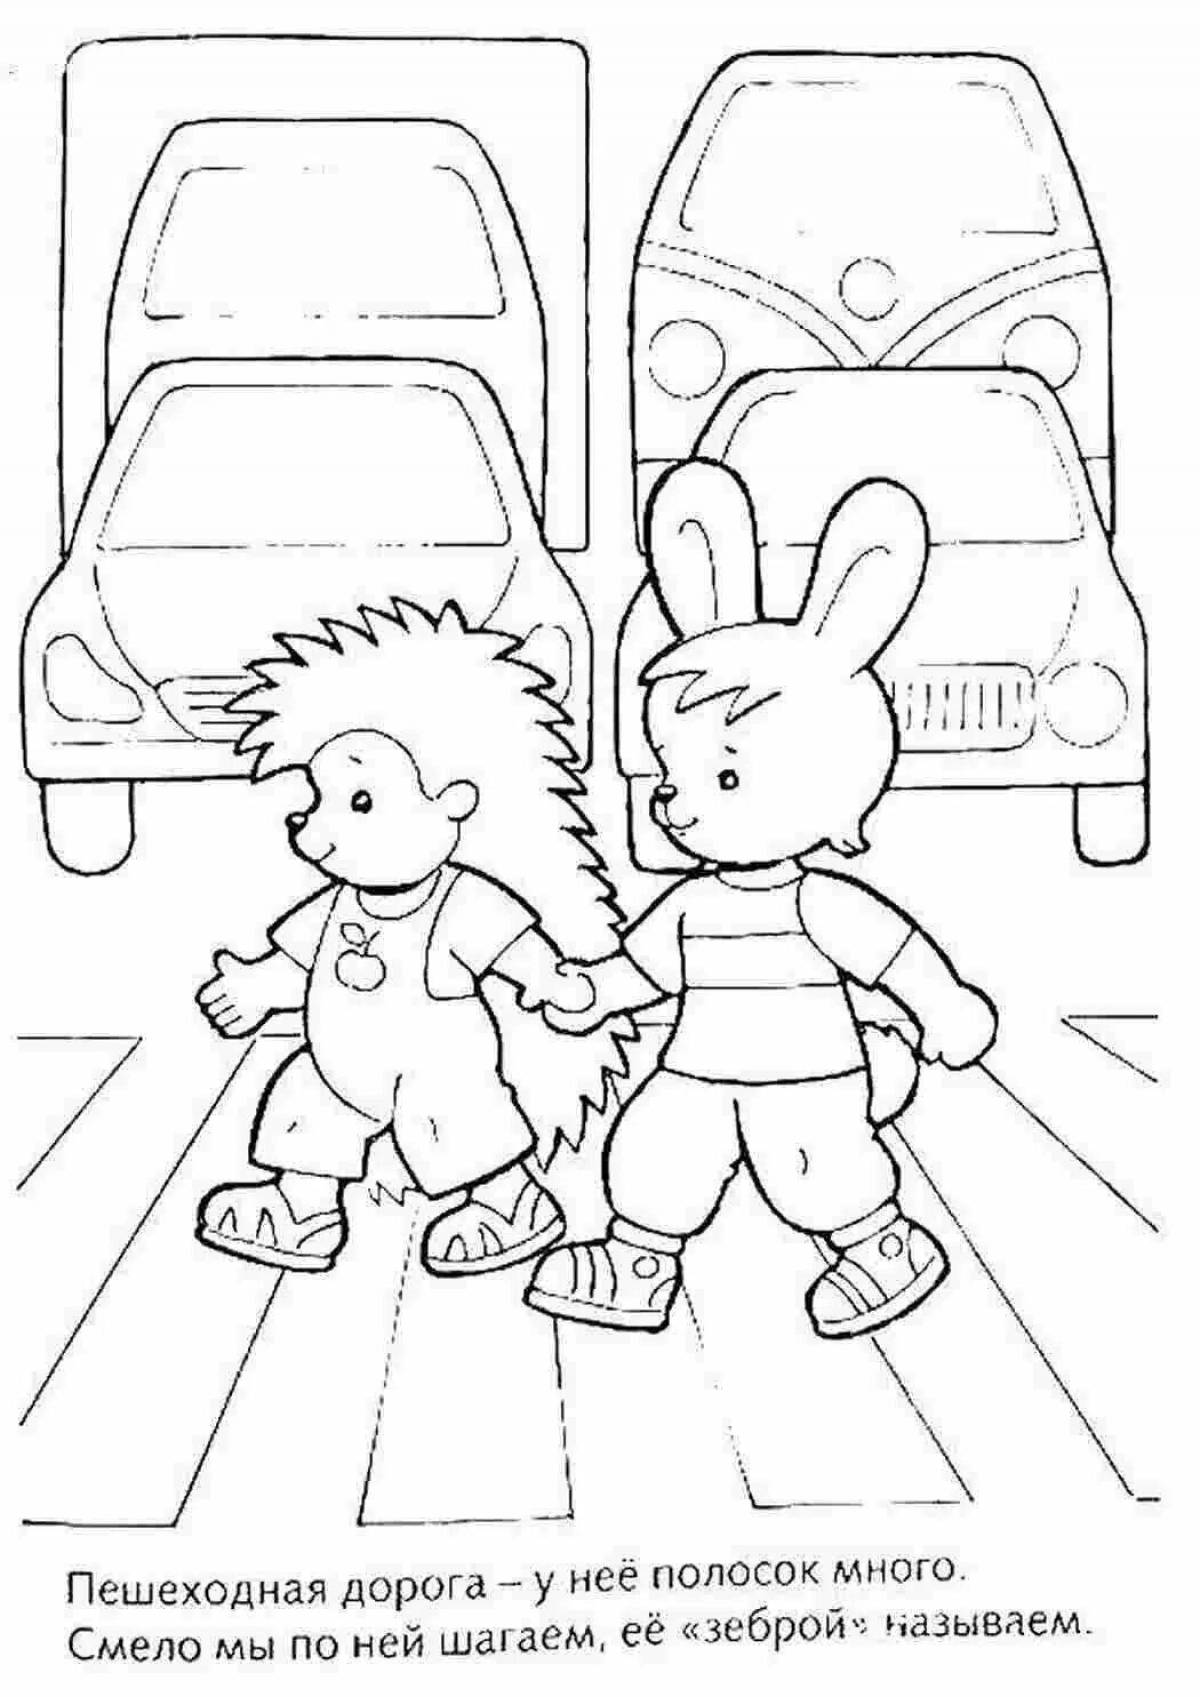 For children traffic rules for preschoolers #20